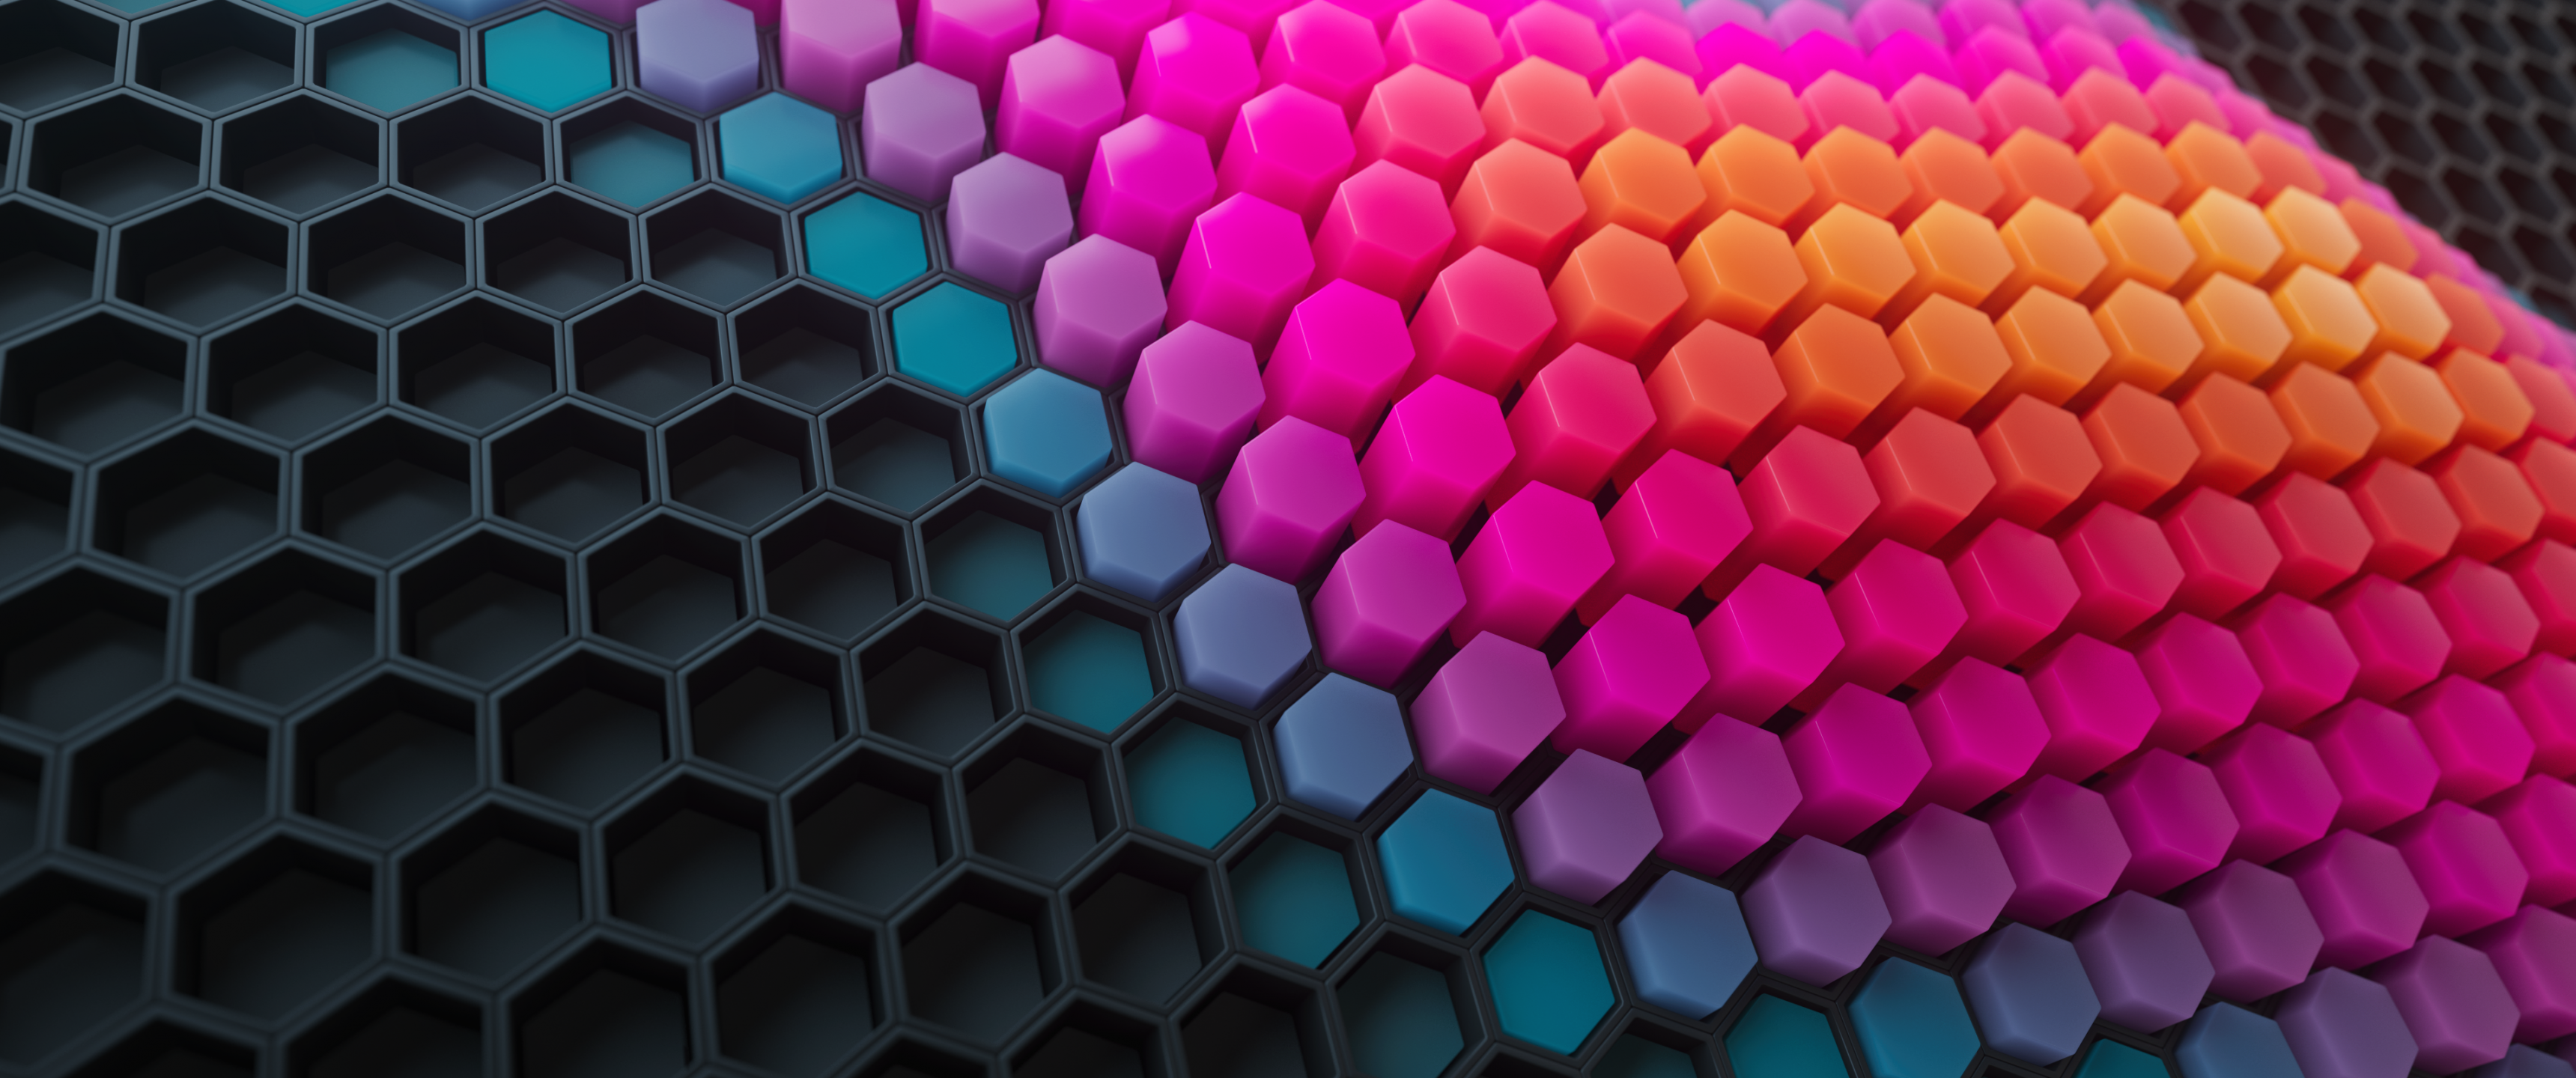 Hexagons Wallpaper 4K Colorful blocks Patterns 2286